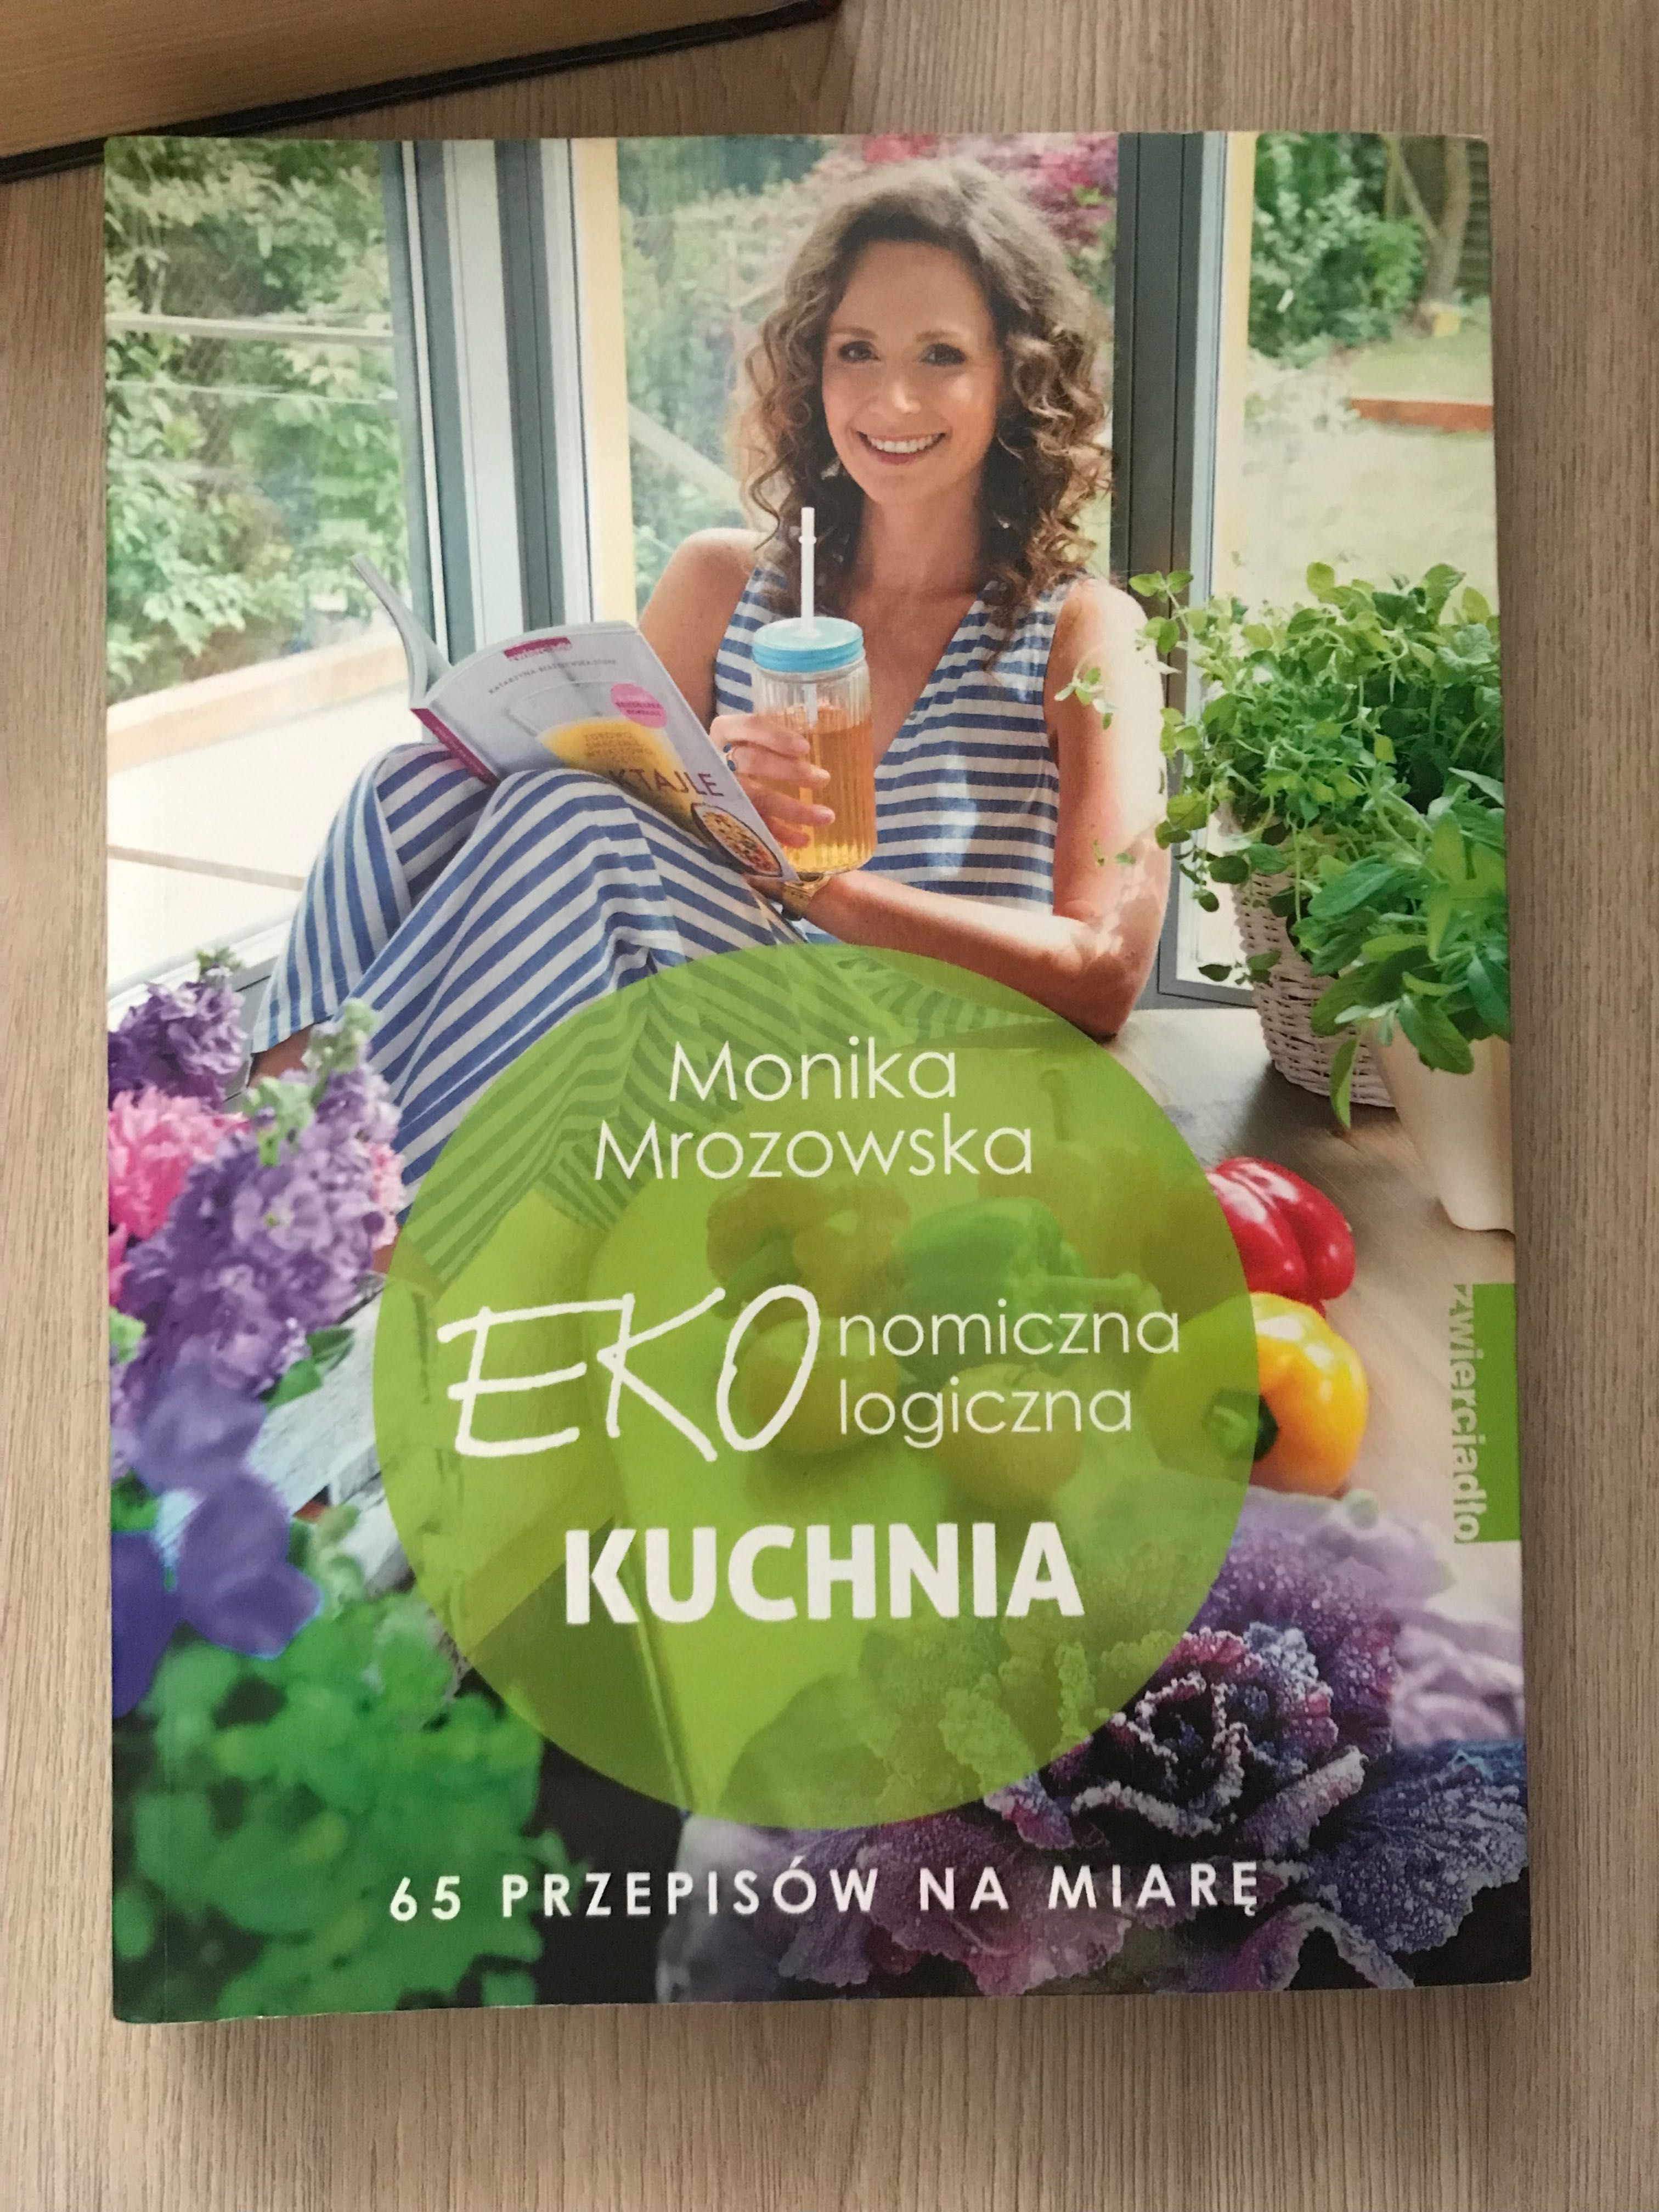 Książka kucharska Monika Mrozowska Ekonomiczna ekologiczna kuchnia